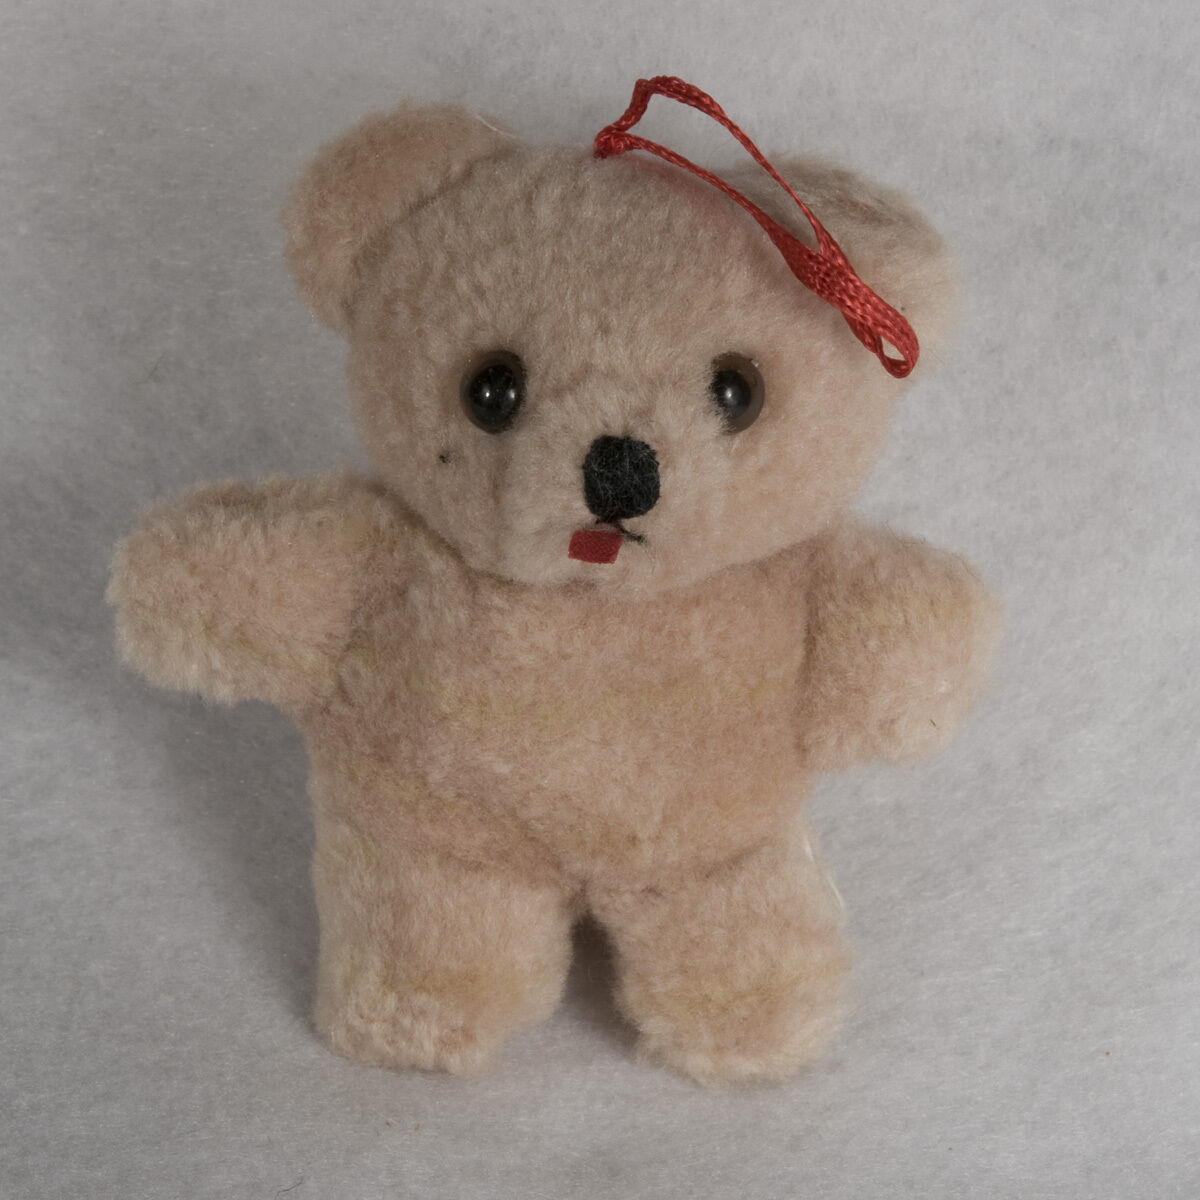 6 Piece Lot 4" Plush Teddy Bear #12202122 Unbranded